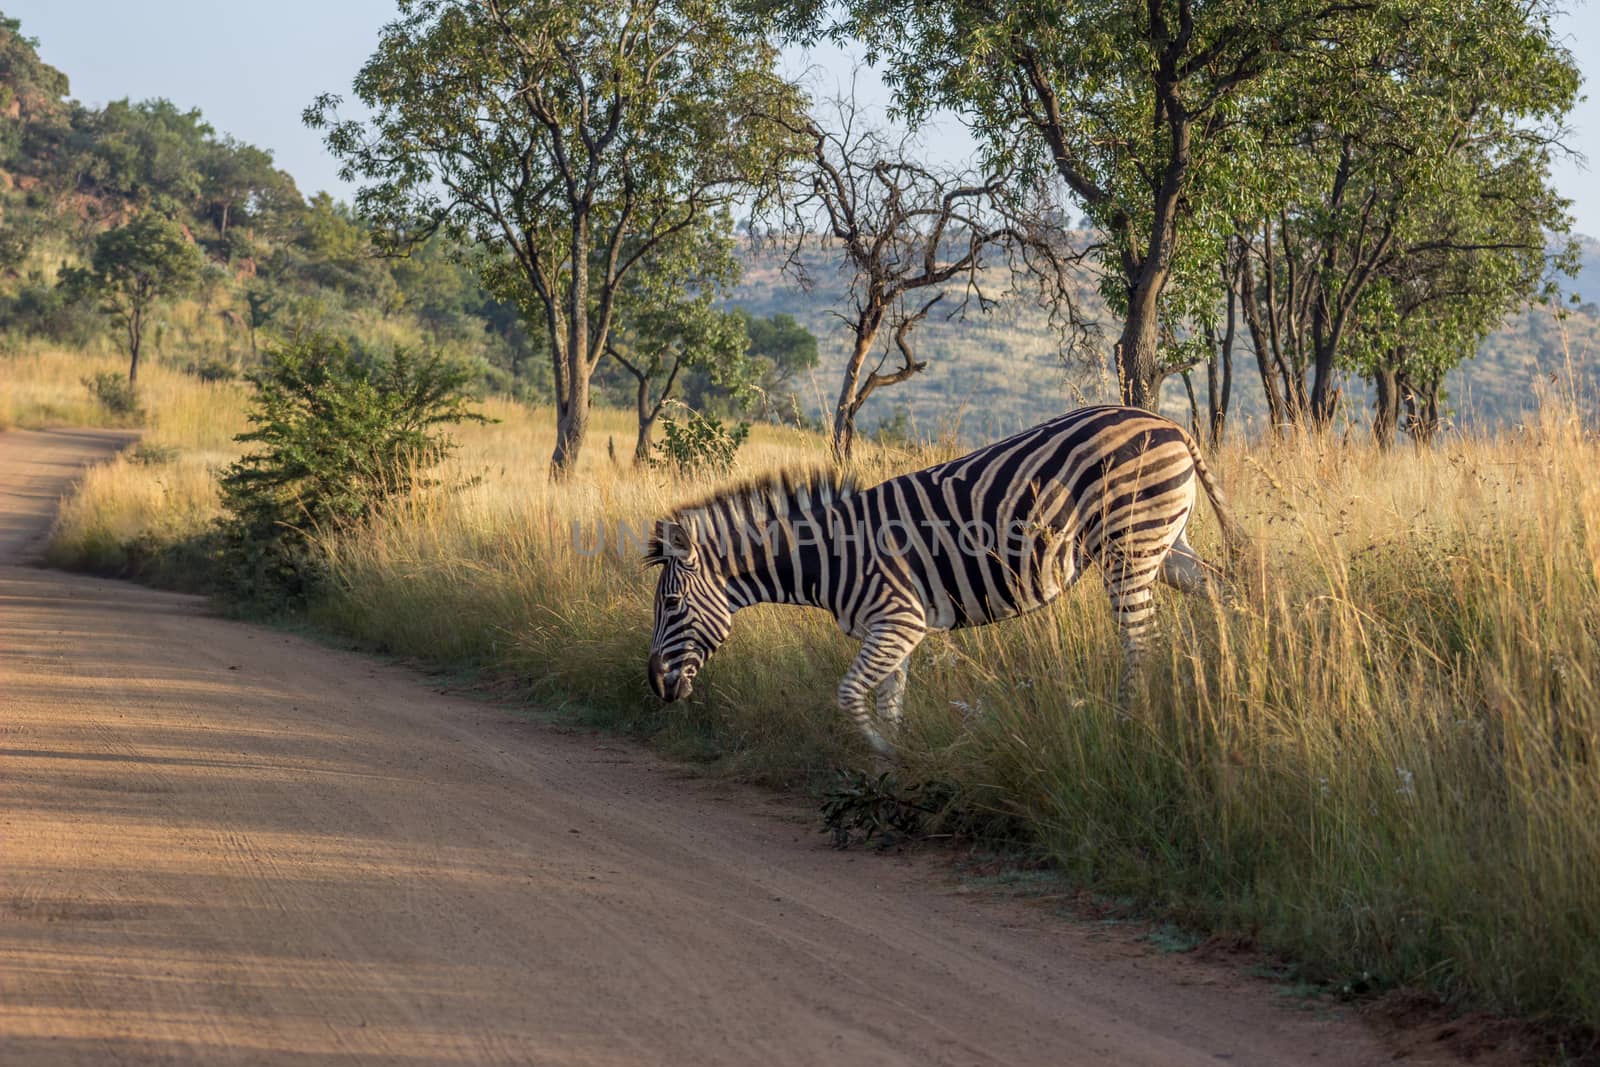 Burchels Zebra about to cross a dirt road